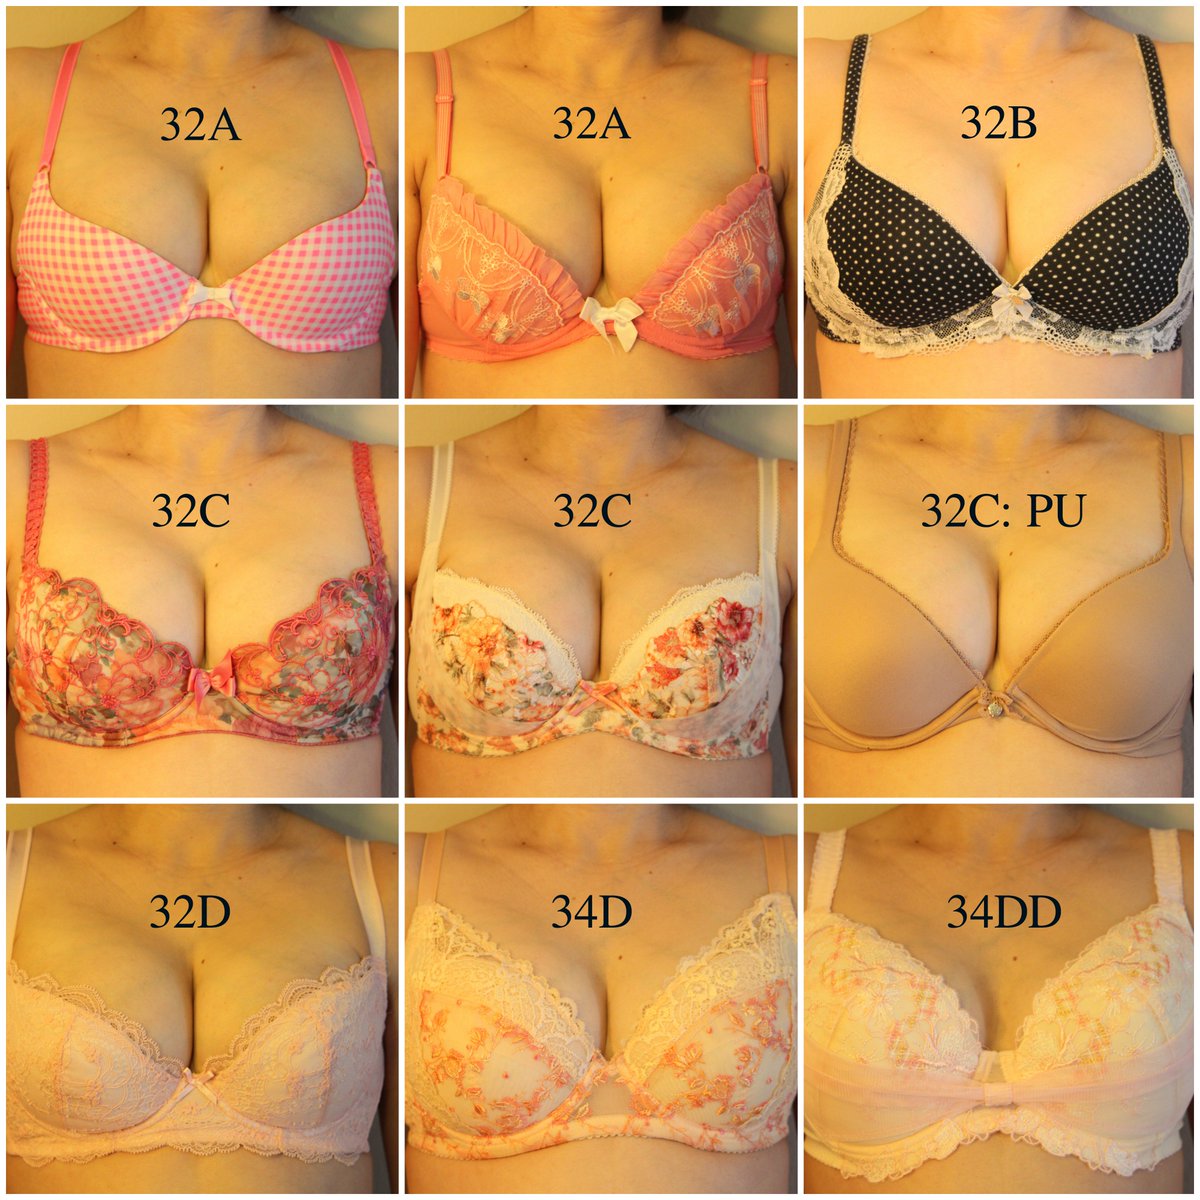 32i breast size